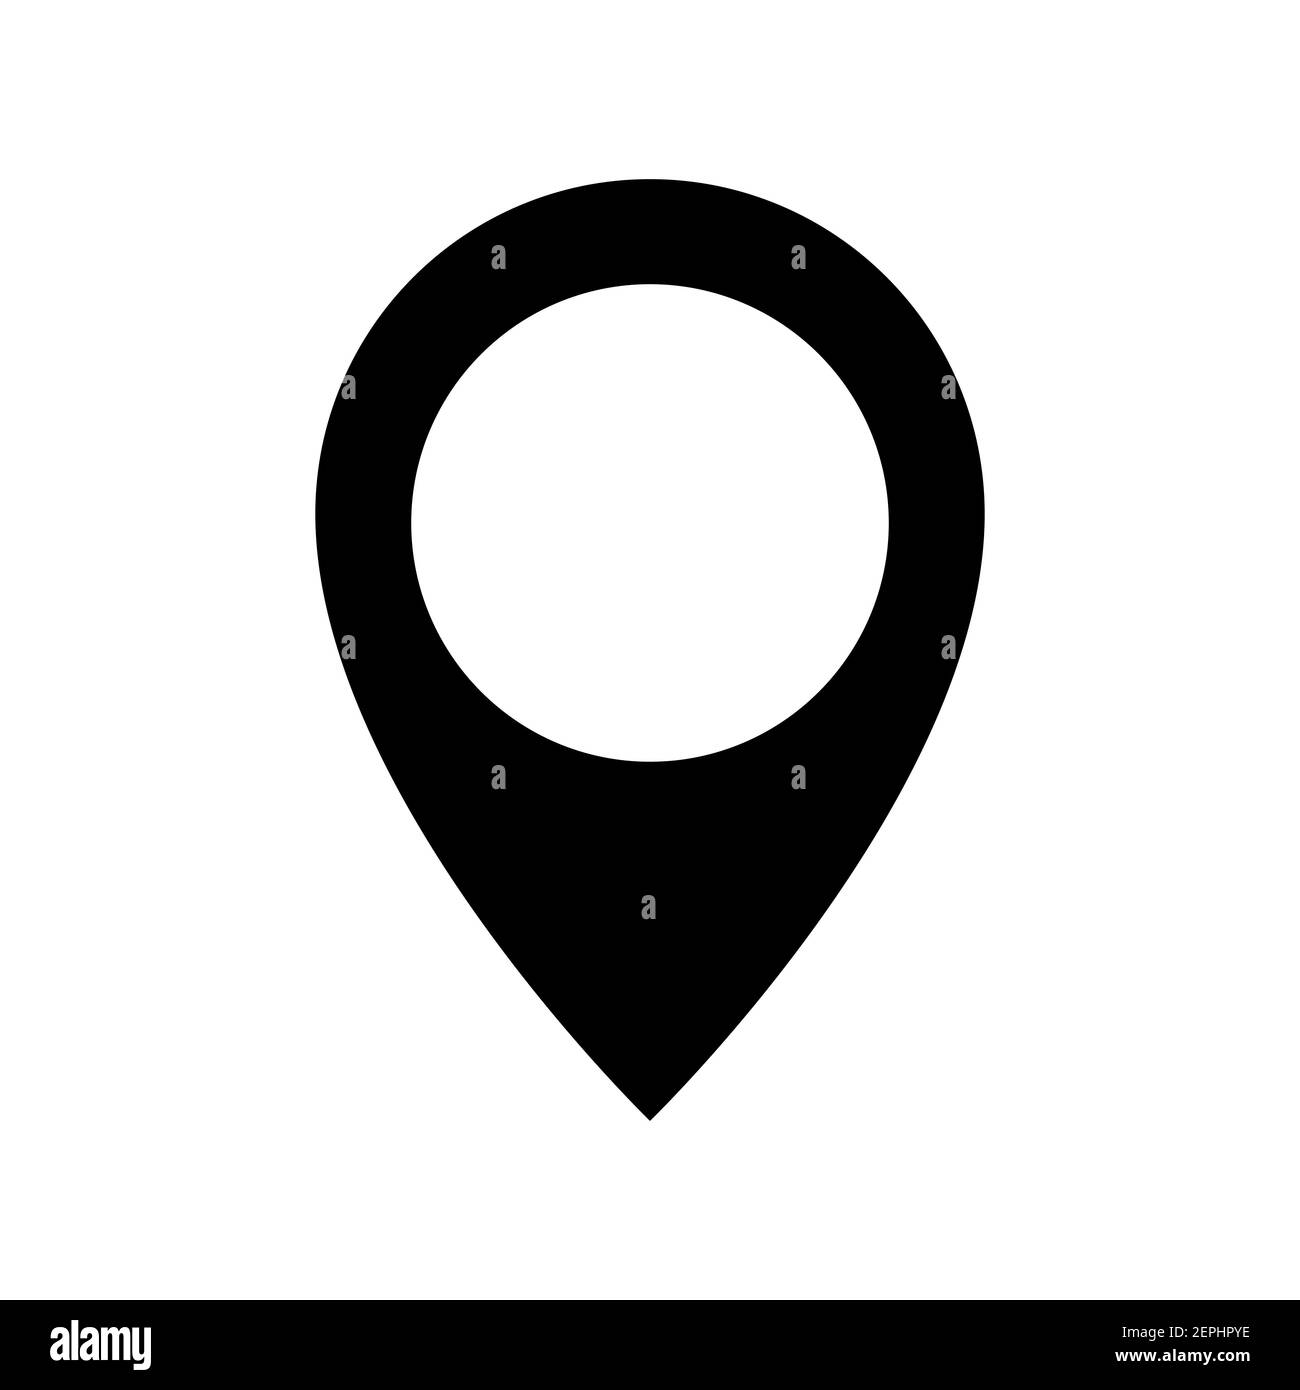 Location pin icon, map label mark, black simple location marker Stock Vector